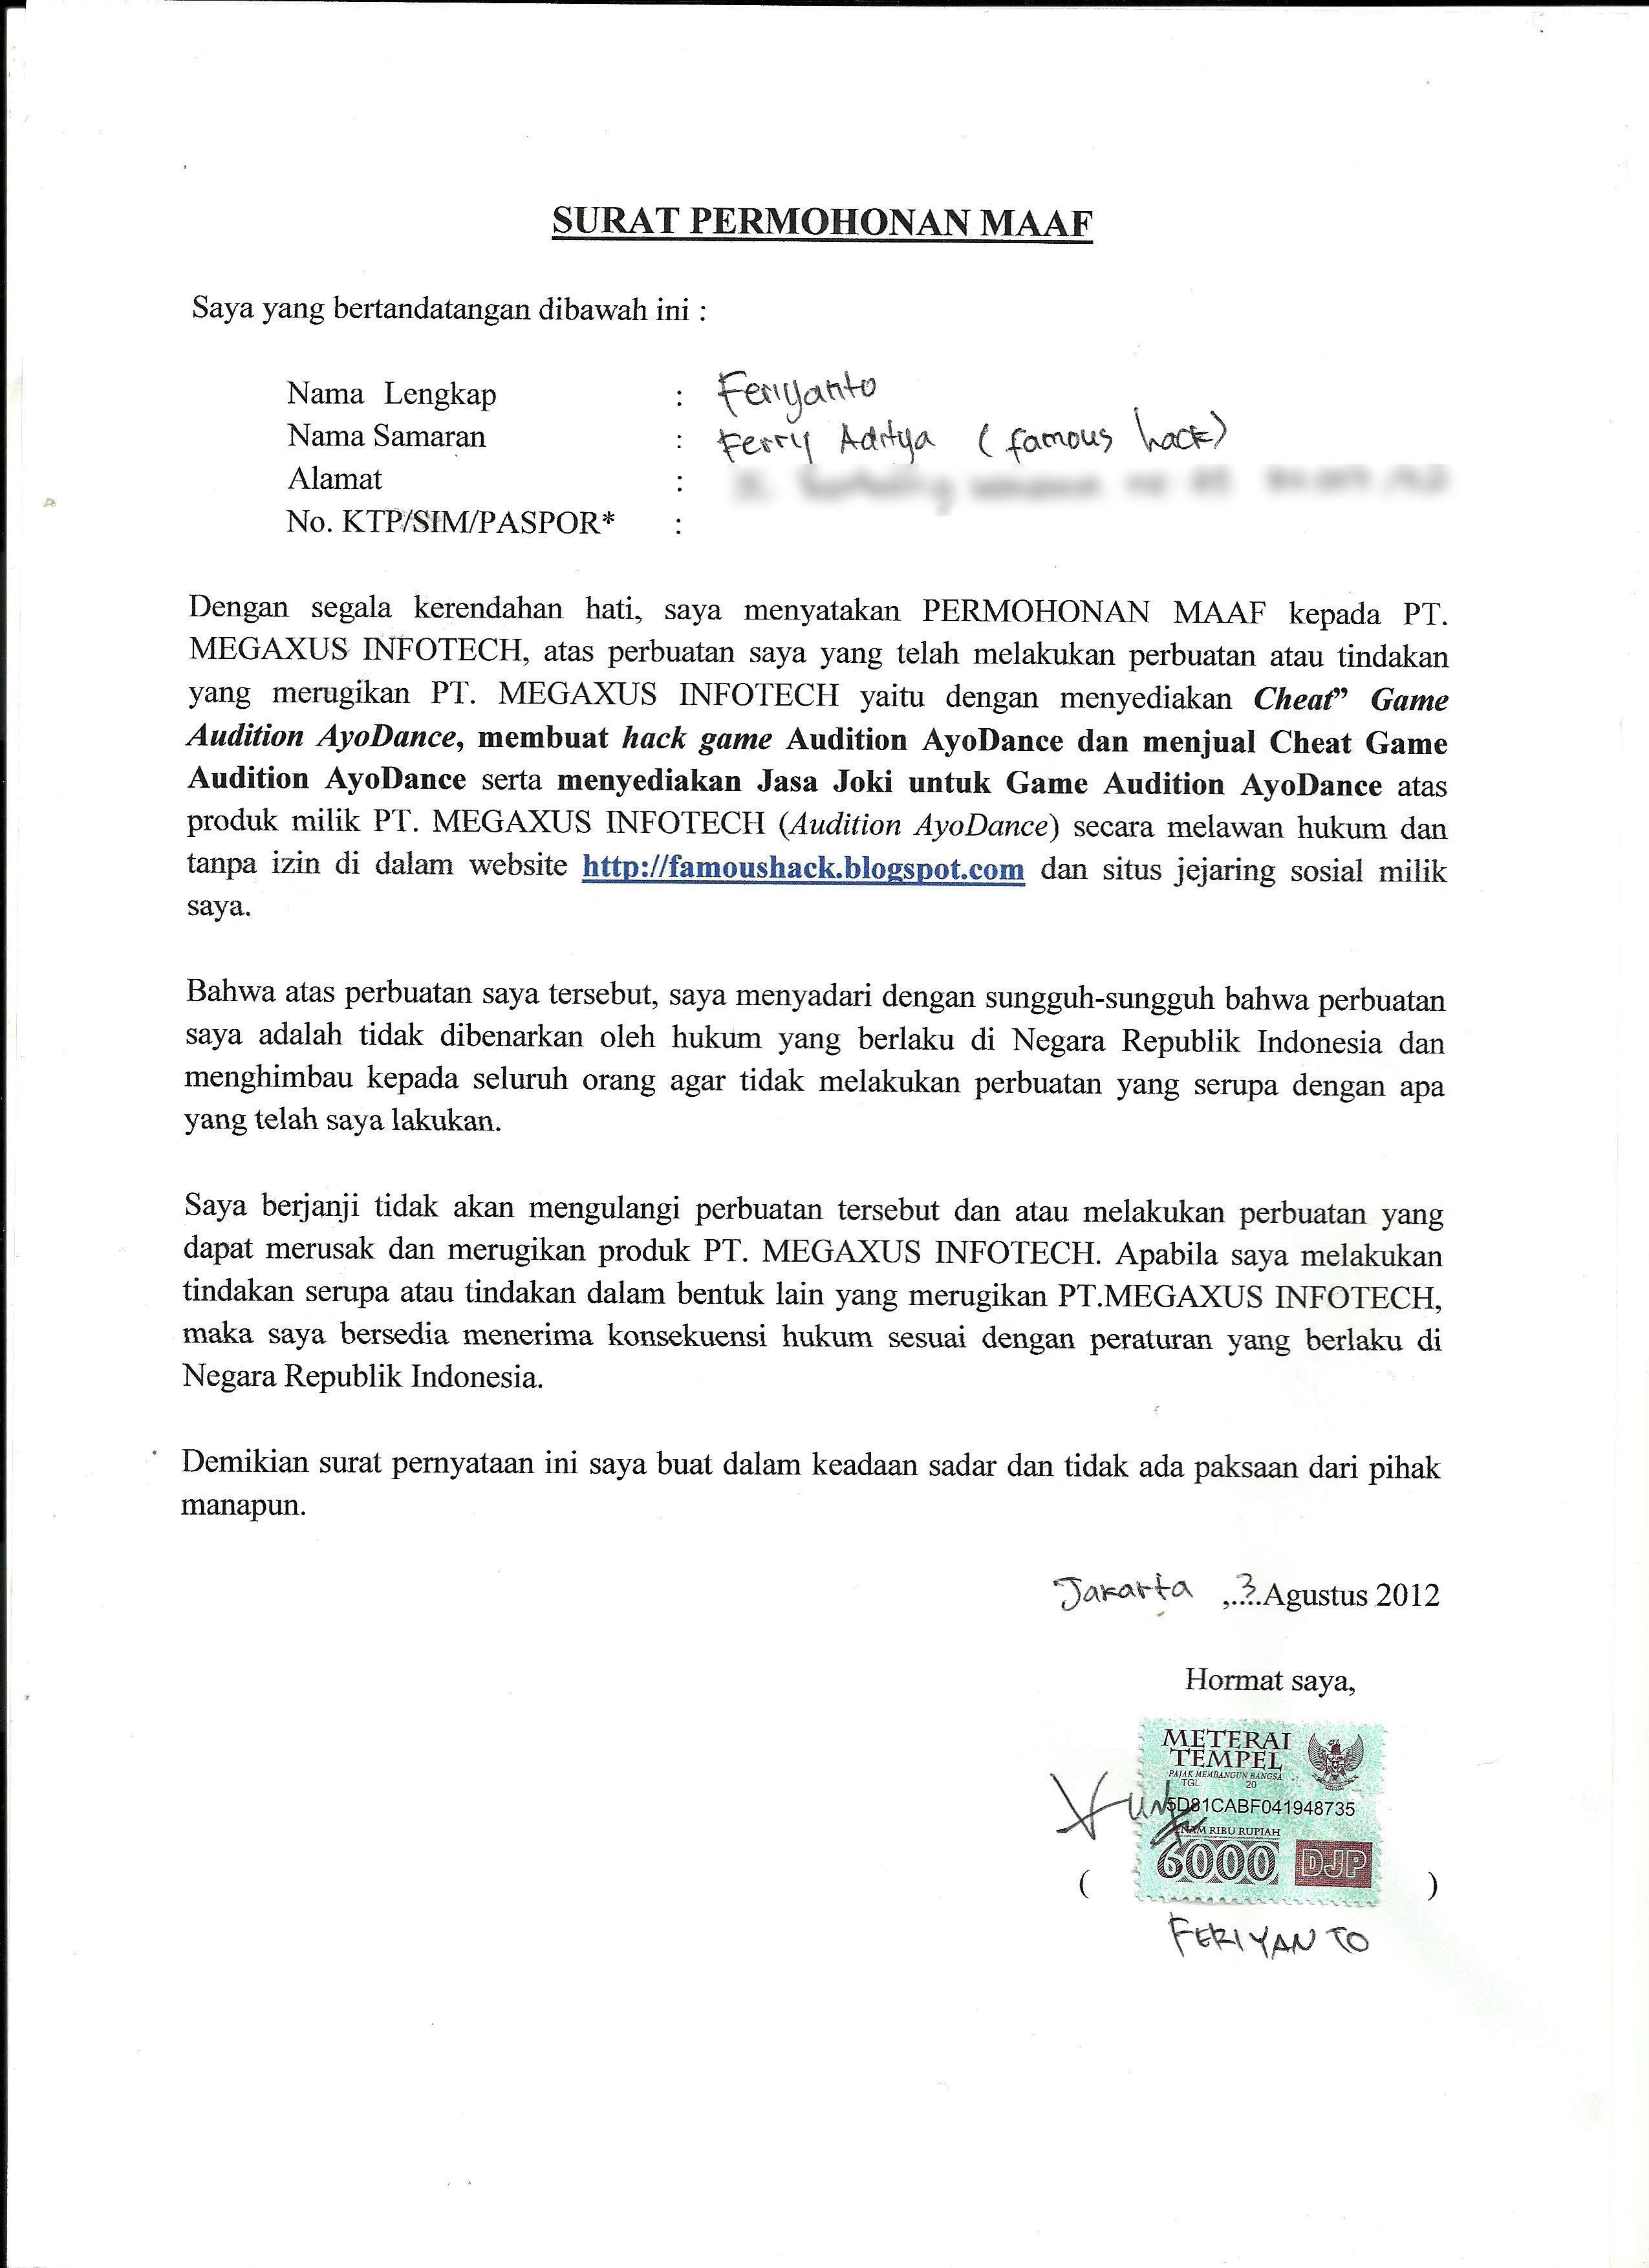 Surat Permintaan Maaf Feriyanto Untuk Ayodance Audition